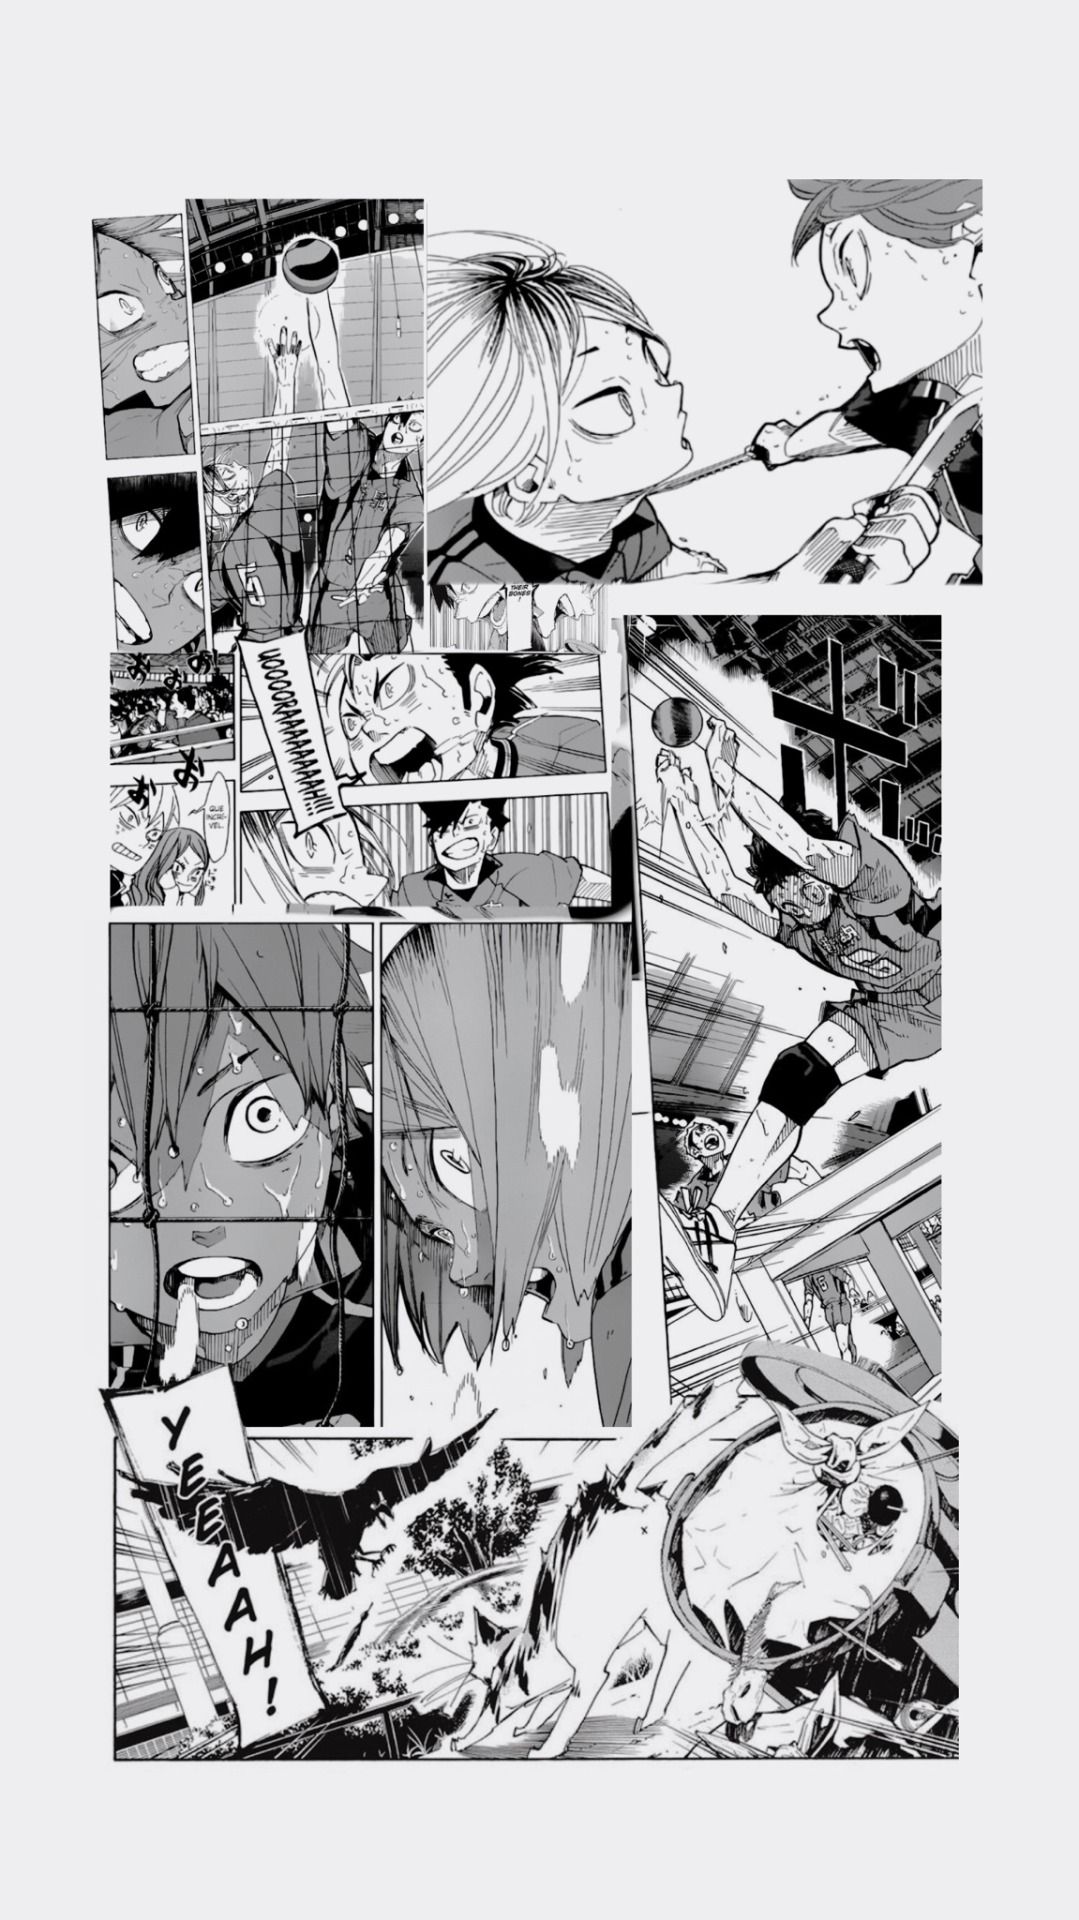 220 Haikyuu manga panels ideas